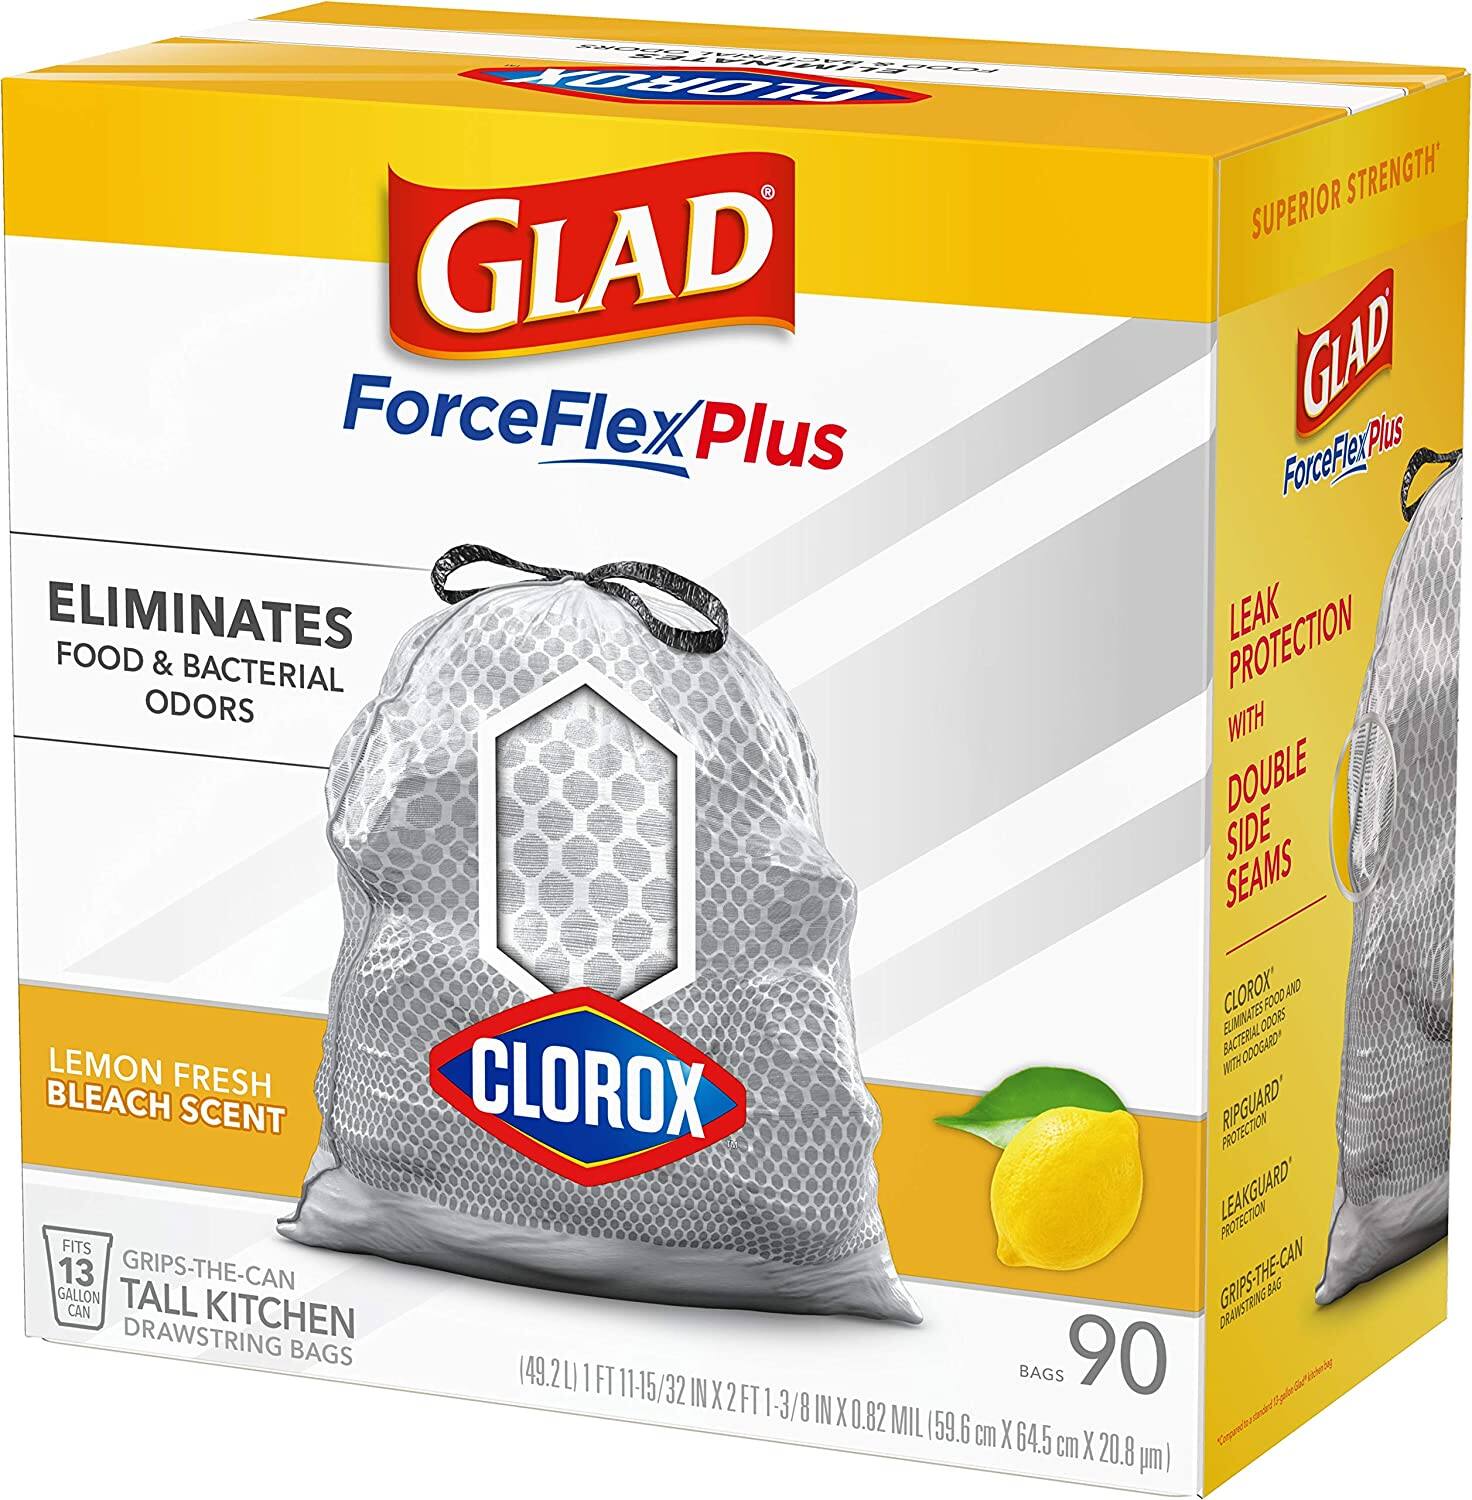 90-Ct 13-Gal Glad ForceFlex Plus Kitchen Drawstring Trash Bags (Lemon Fresh Bleach) 3 for $33.42 ($11.42 each) w/ S&S + Free Shipping